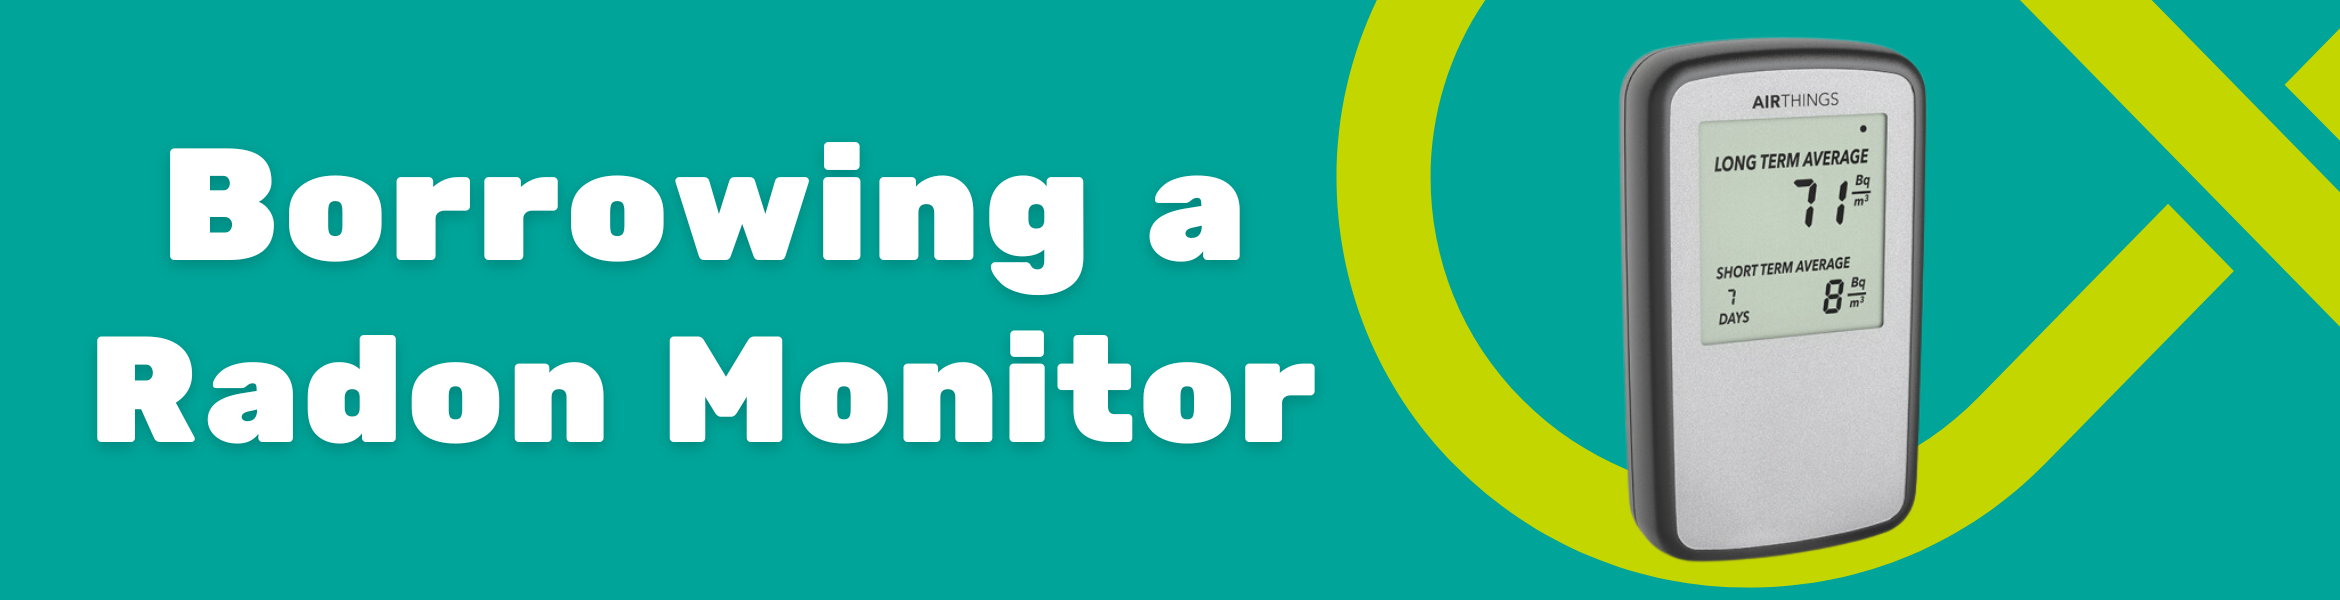 Borrowing a Radon Monitor